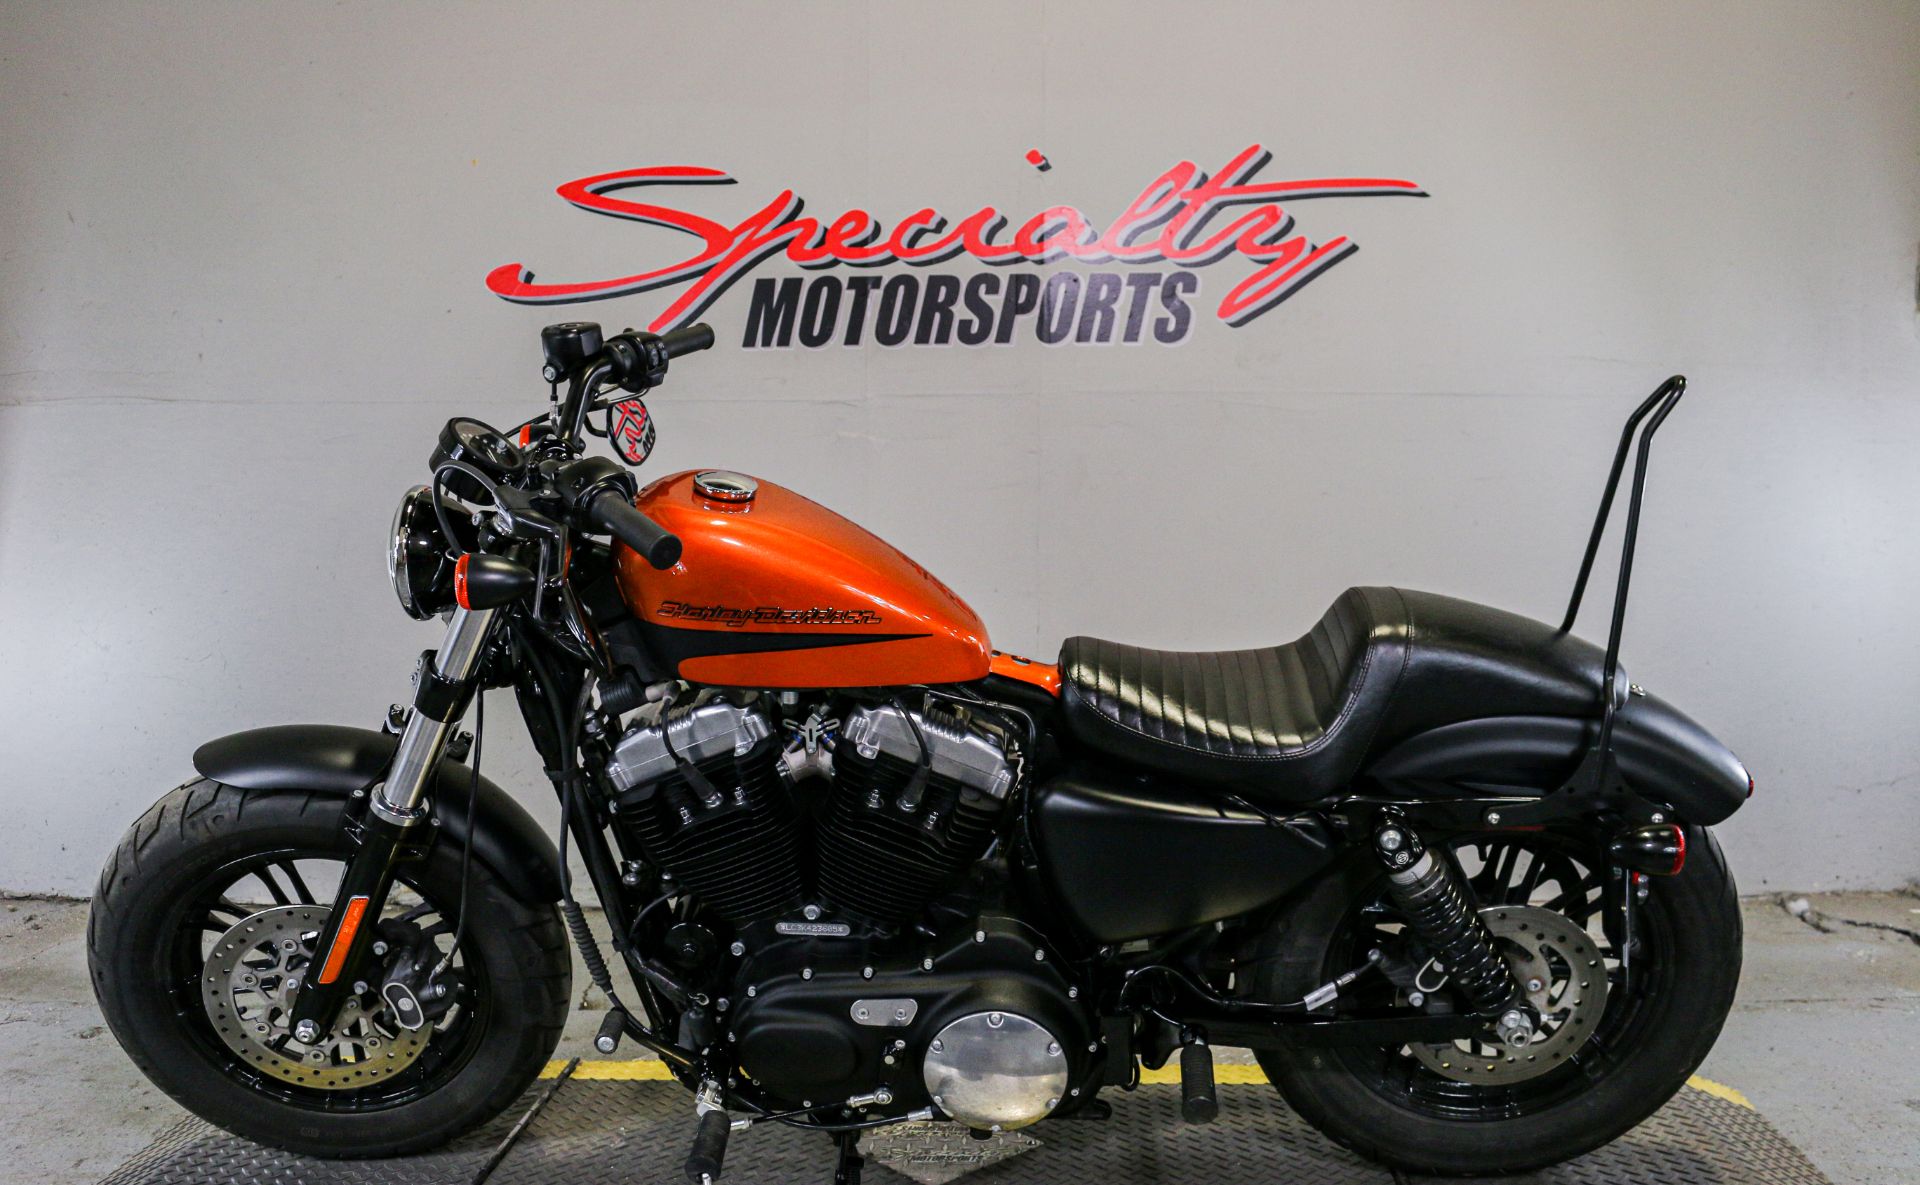 2019 Harley-Davidson Forty-Eight® in Sacramento, California - Photo 4